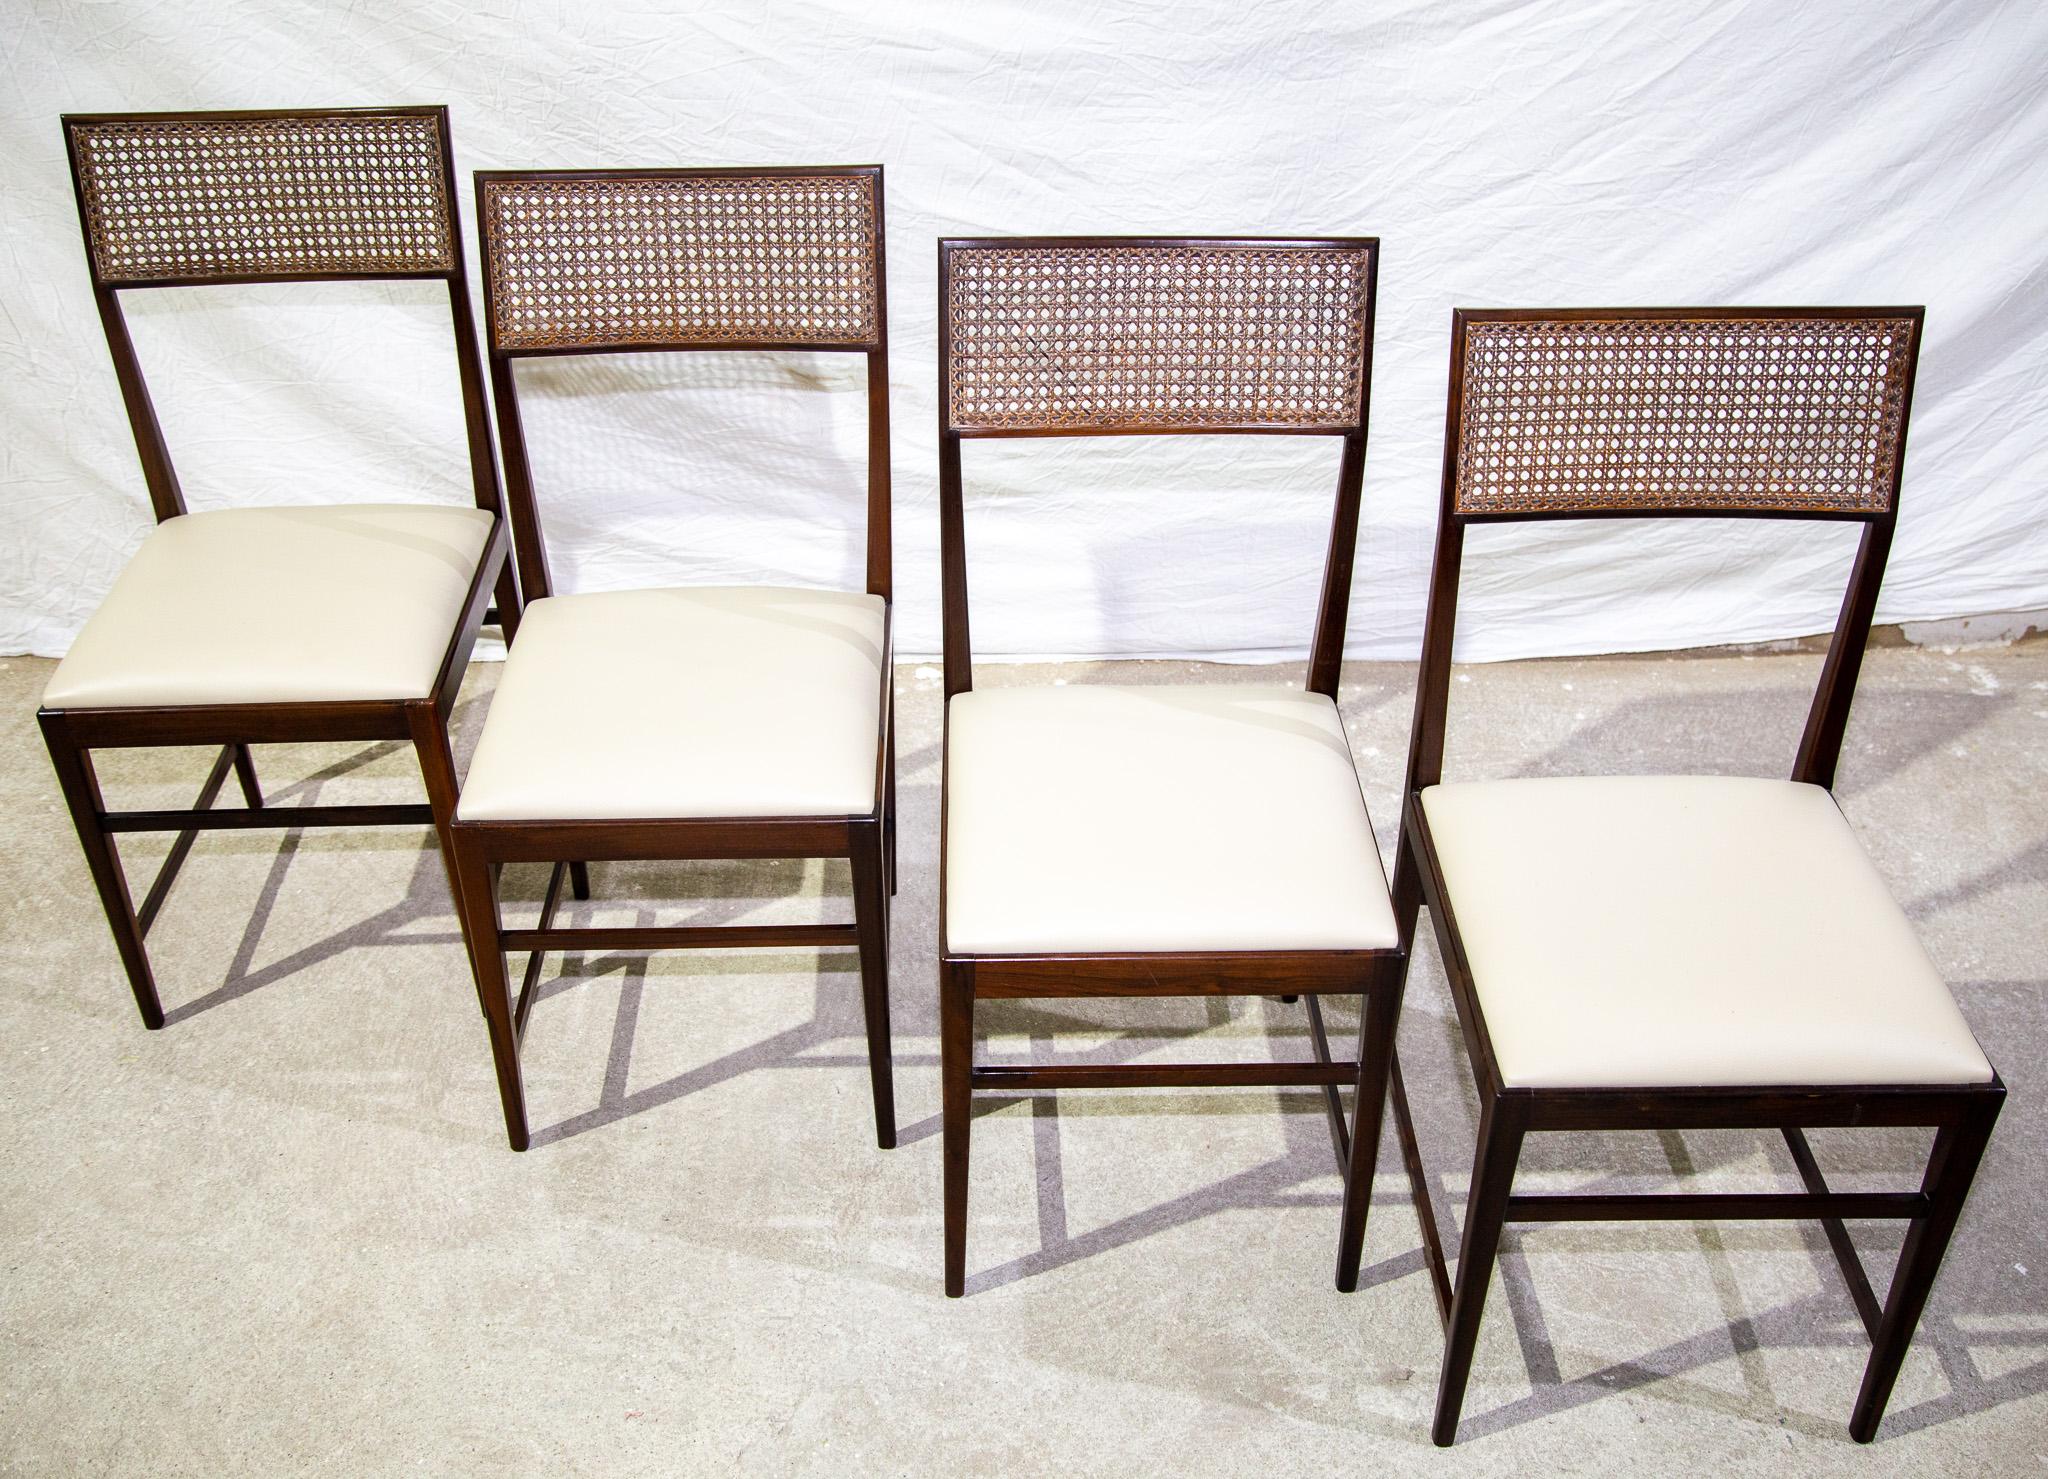 20th Century Brazilian Modern 4 Chair Set in Hardwood, Cane, Leather, Joaquim Tenreiro 1950s For Sale